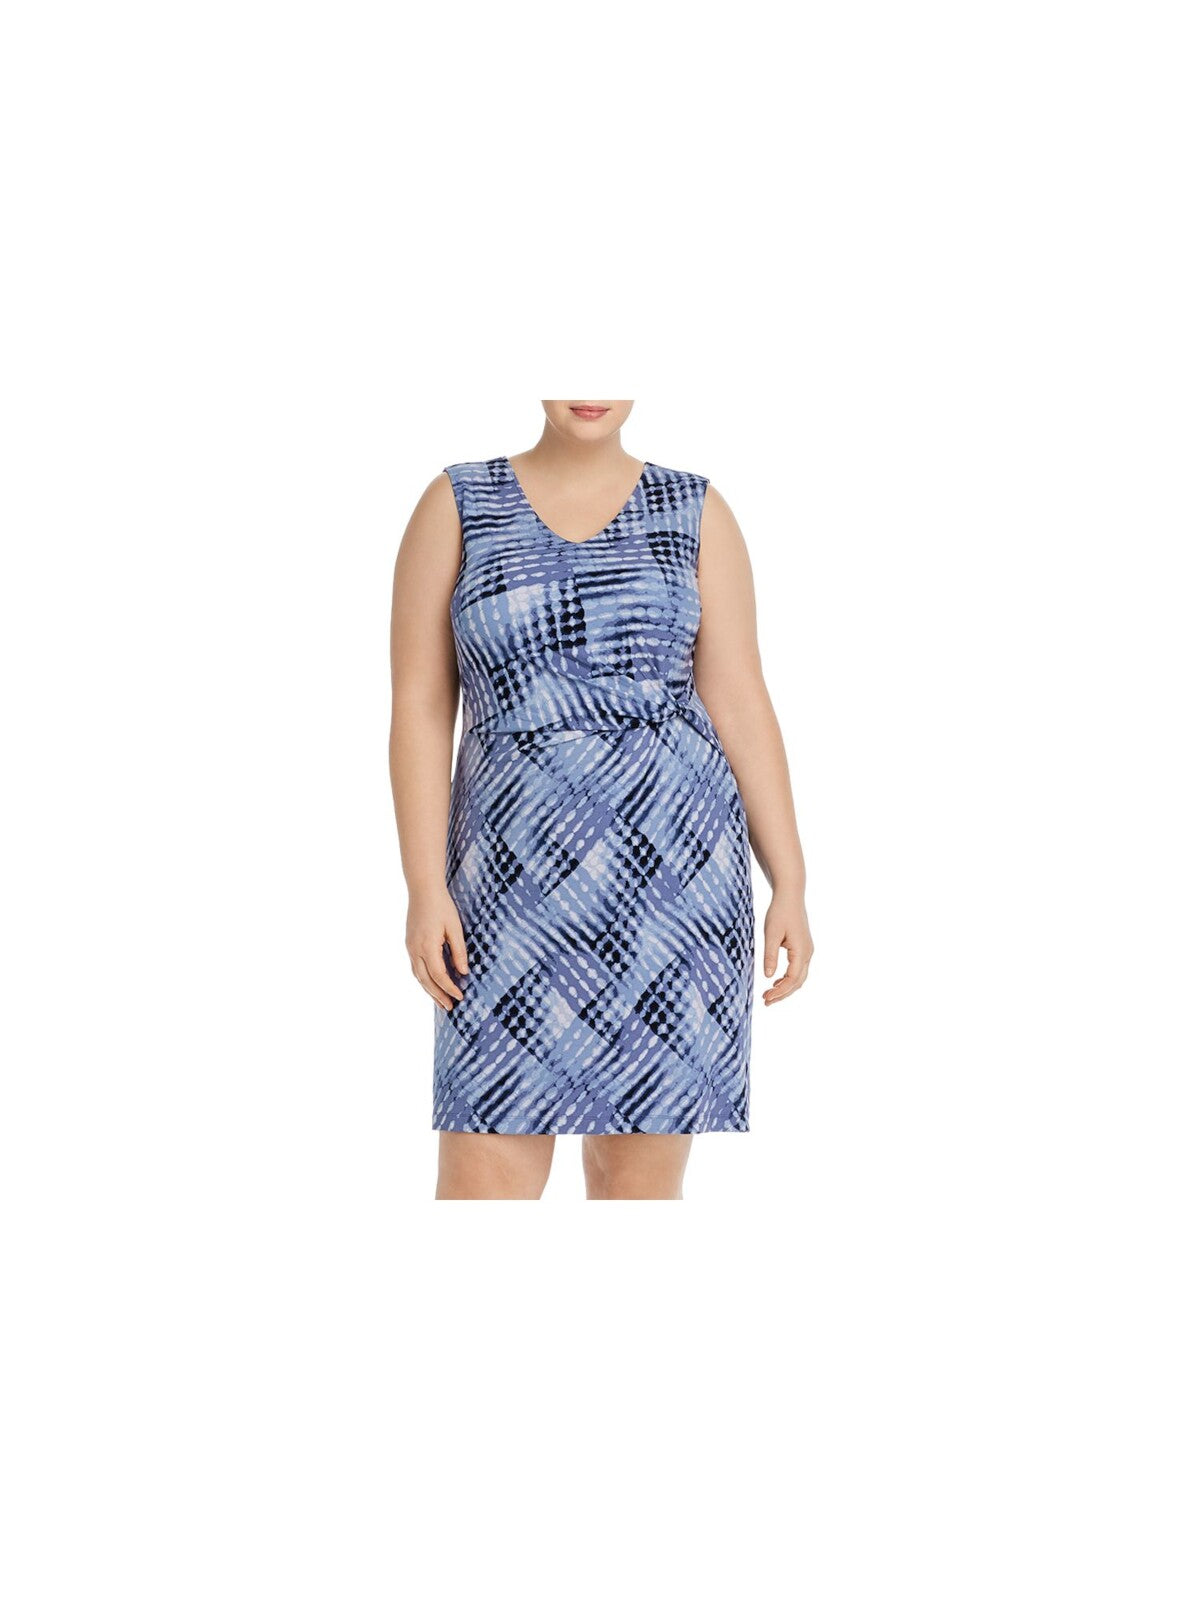 NIC+ZOE Womens Blue Stretch Twist Front Lined Tie Dye Sleeveless V Neck Knee Length Wear To Work Sheath Dress Plus 3X